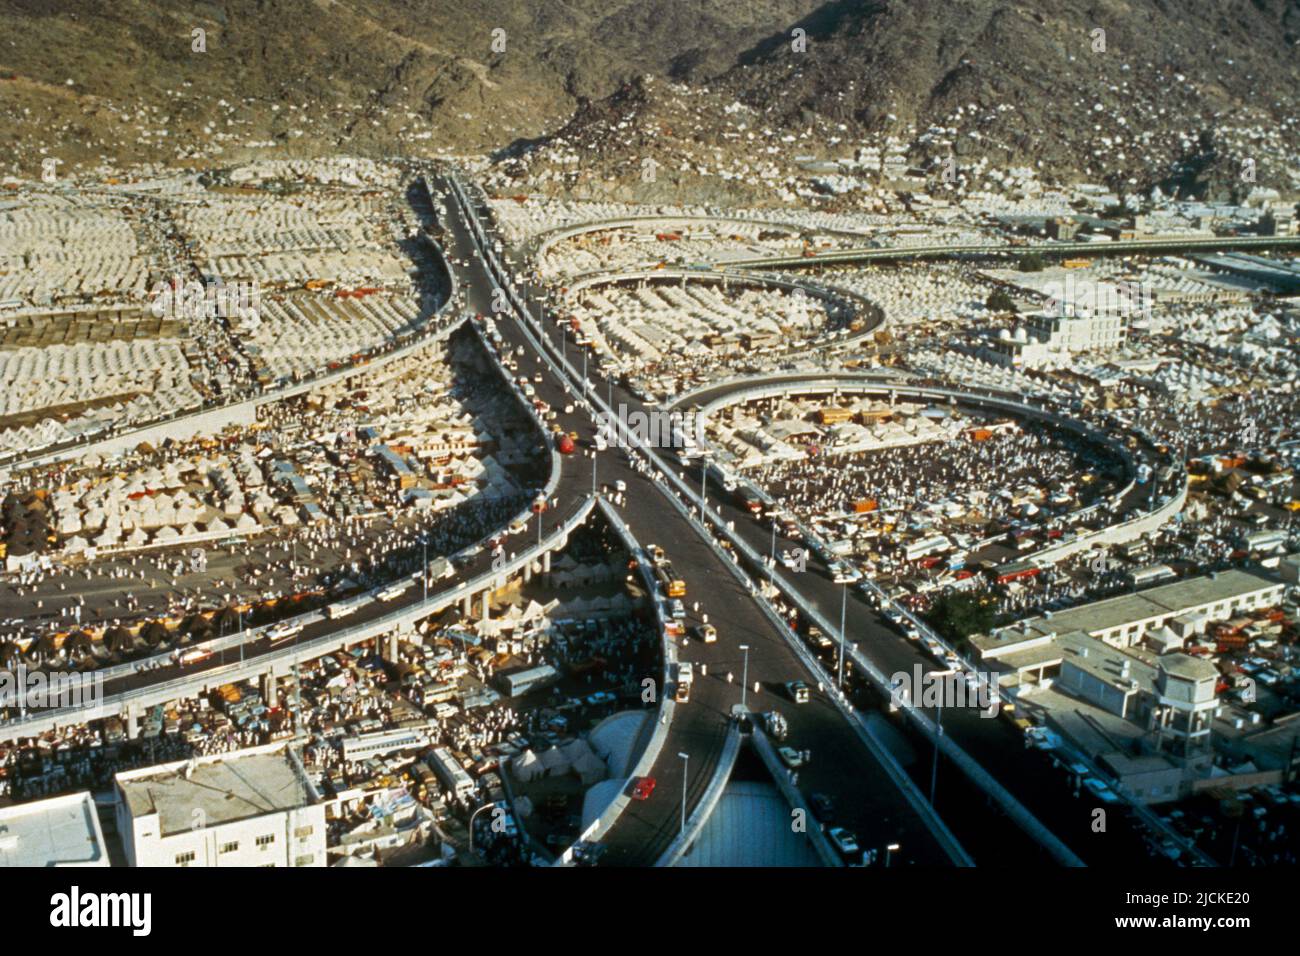 Makkah Hajj Saudi-Arabien Islamische Stadt Mit Zelt Jährliche Pilgerfahrt Luftbild Anzeigen Stockfoto